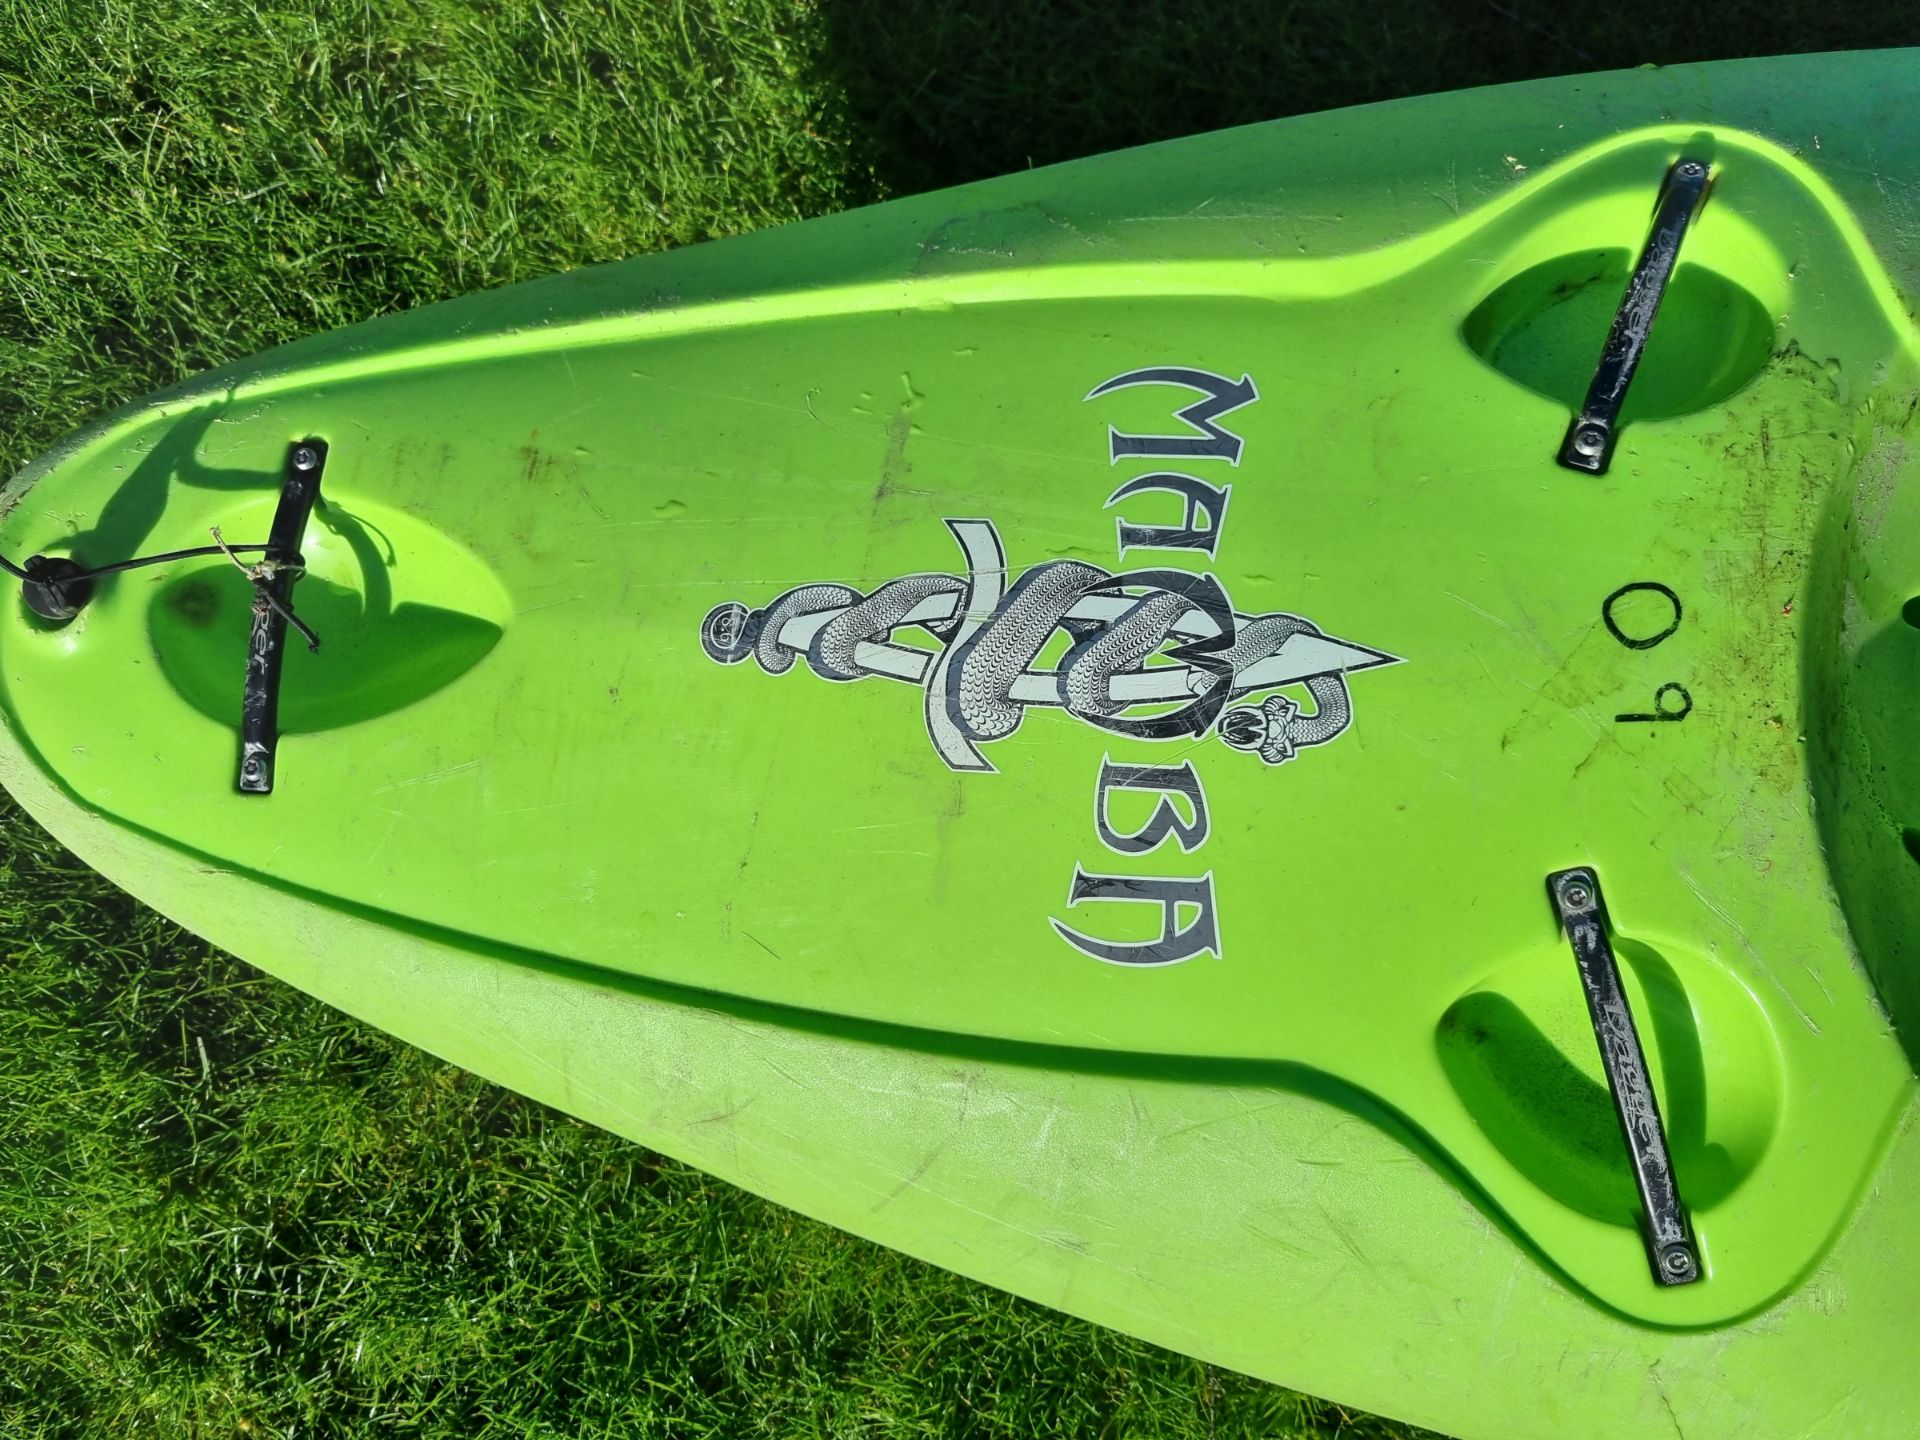 Dagger Mamba kayak/canoe - L260 x W70 x H40cm - Lime green - Image 4 of 7